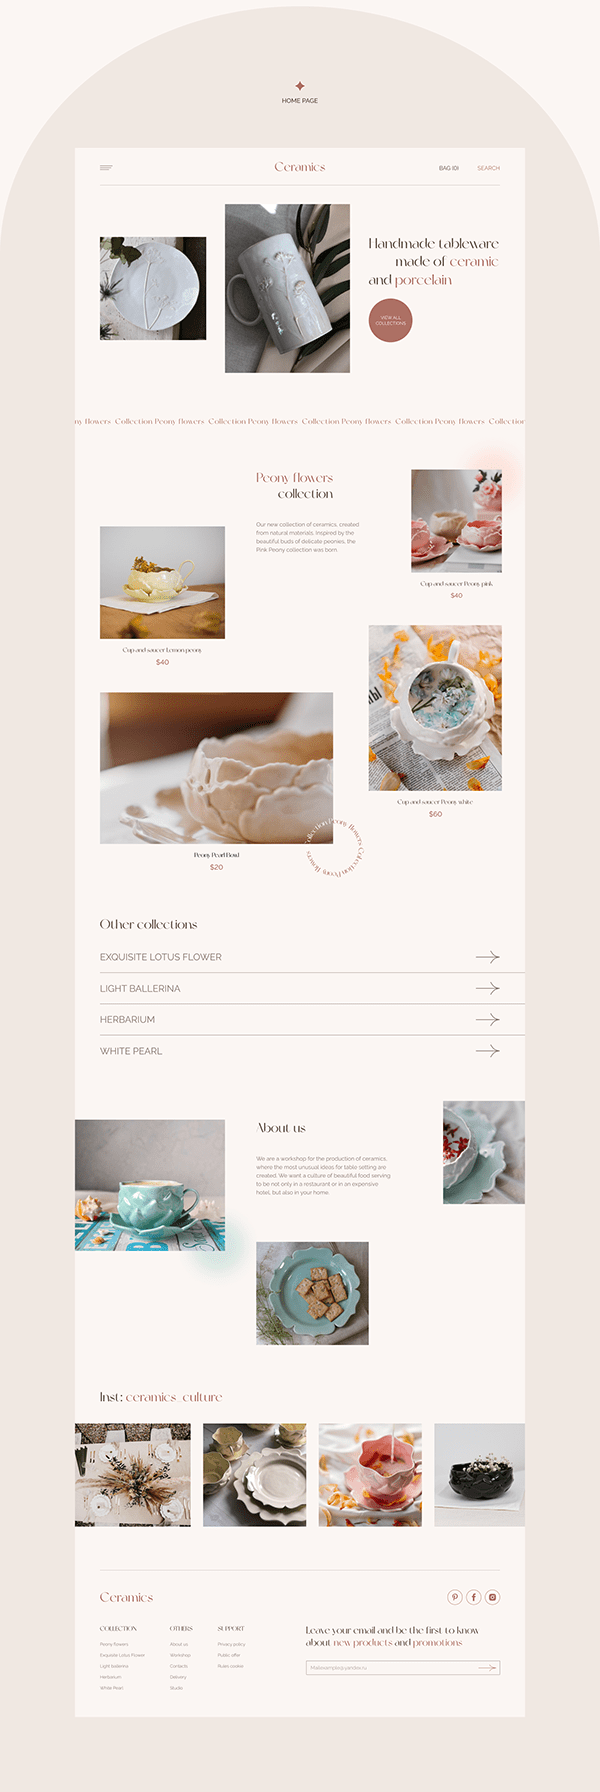 CERAMICS — online store handmade tableware